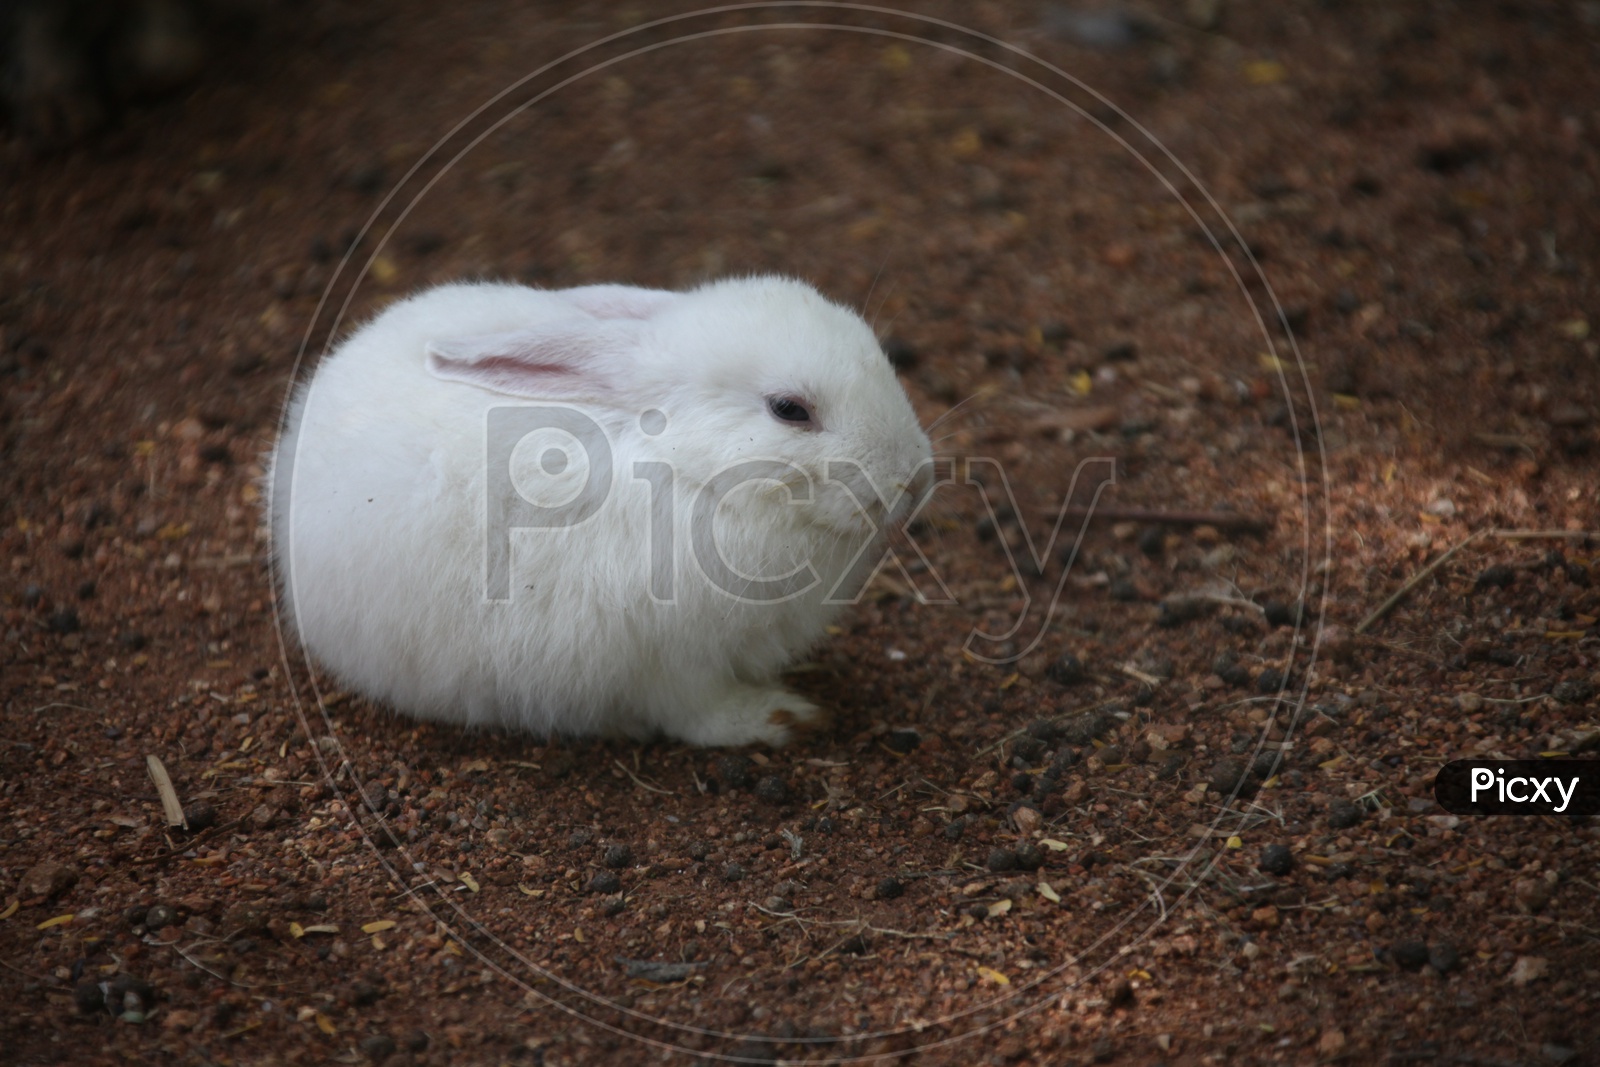 A Domestic rabbit